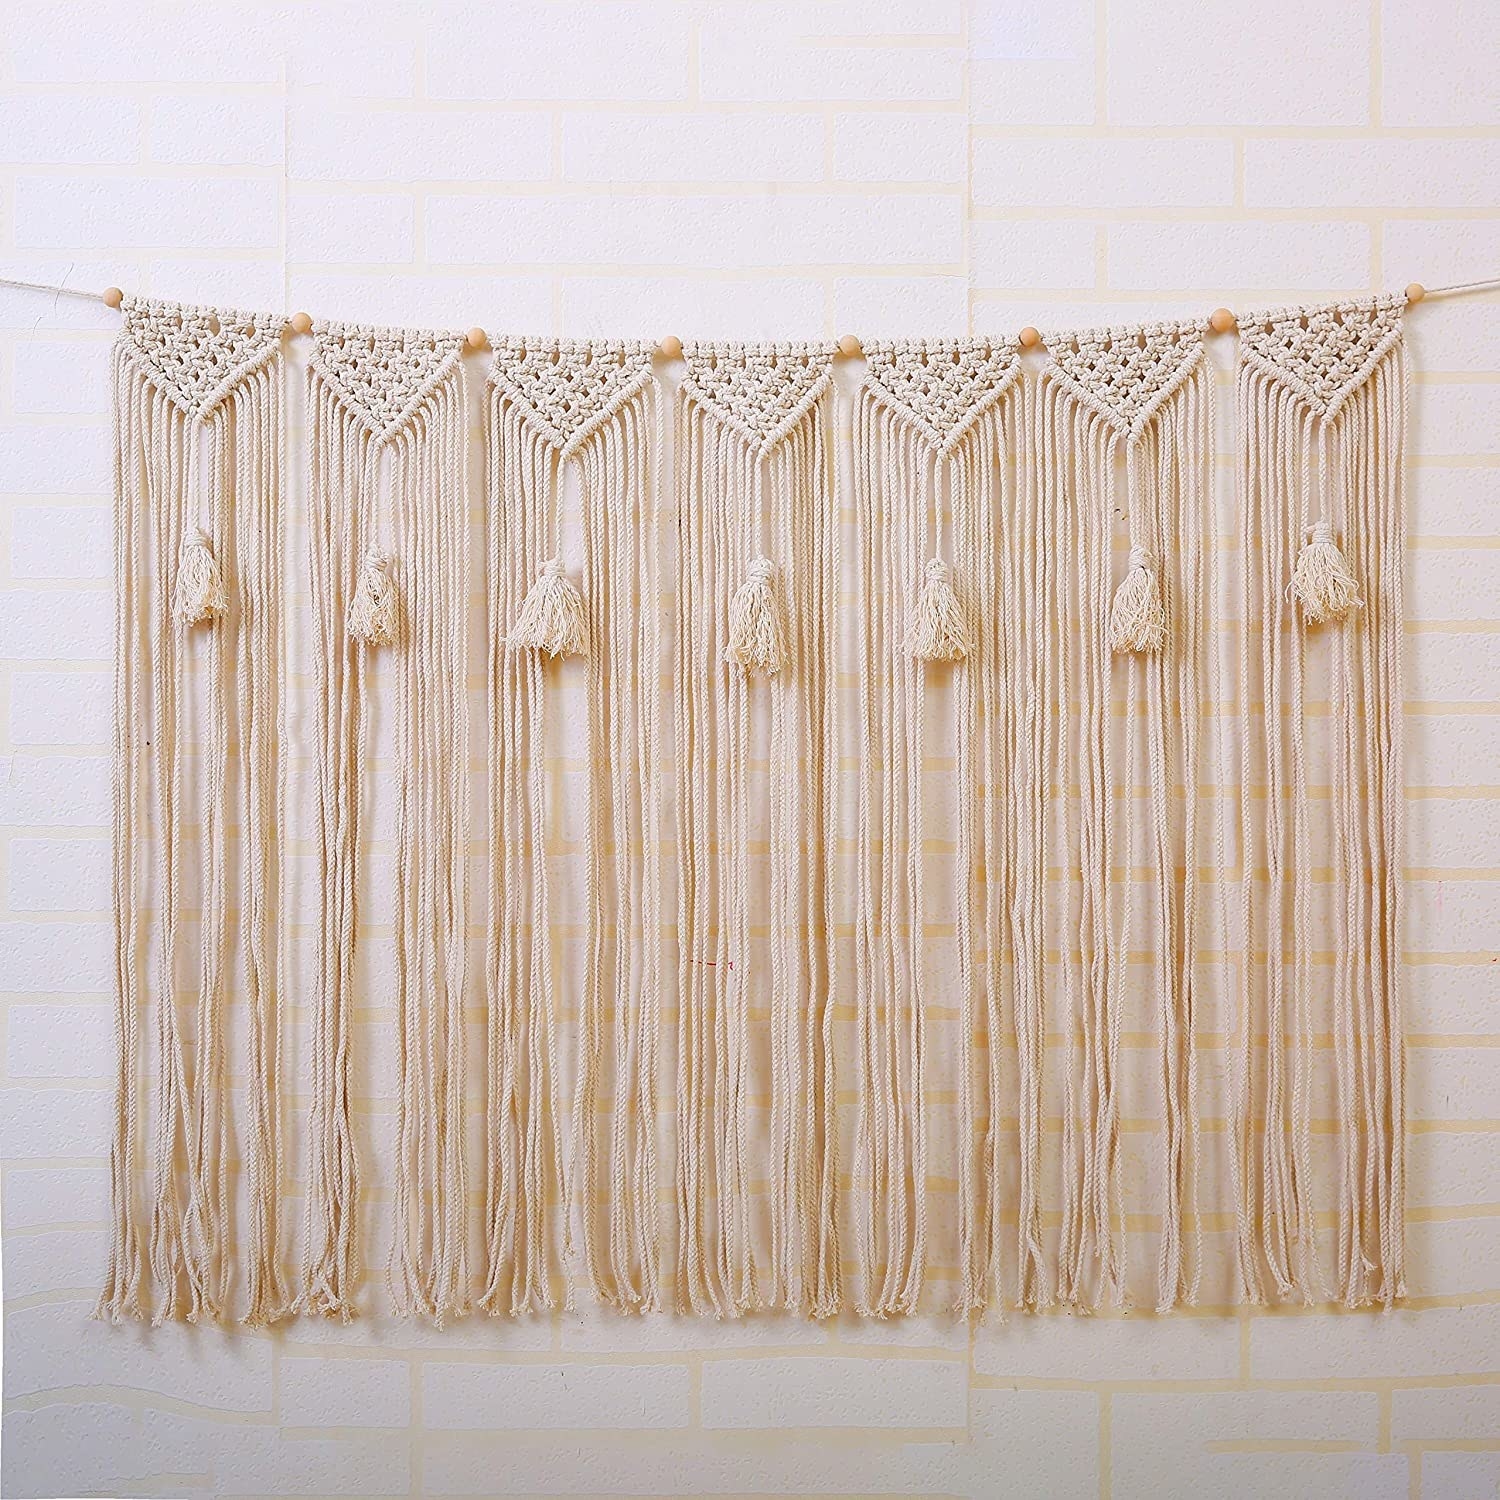 Natural rope macramé wall hanging with tassels